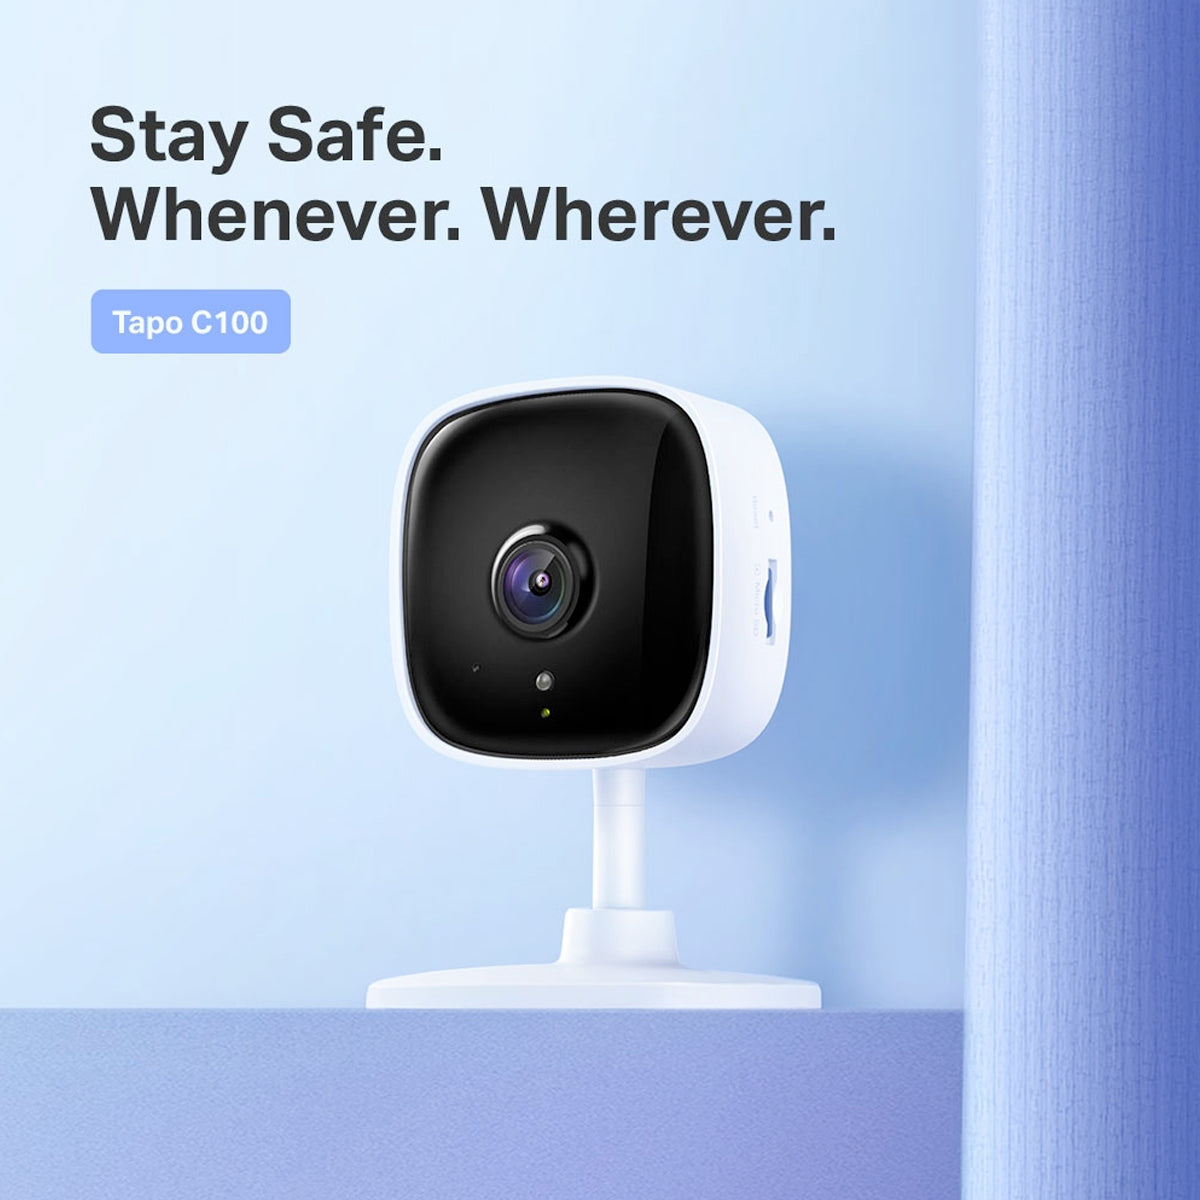 TP-Link Home Security Wi-Fi Camera